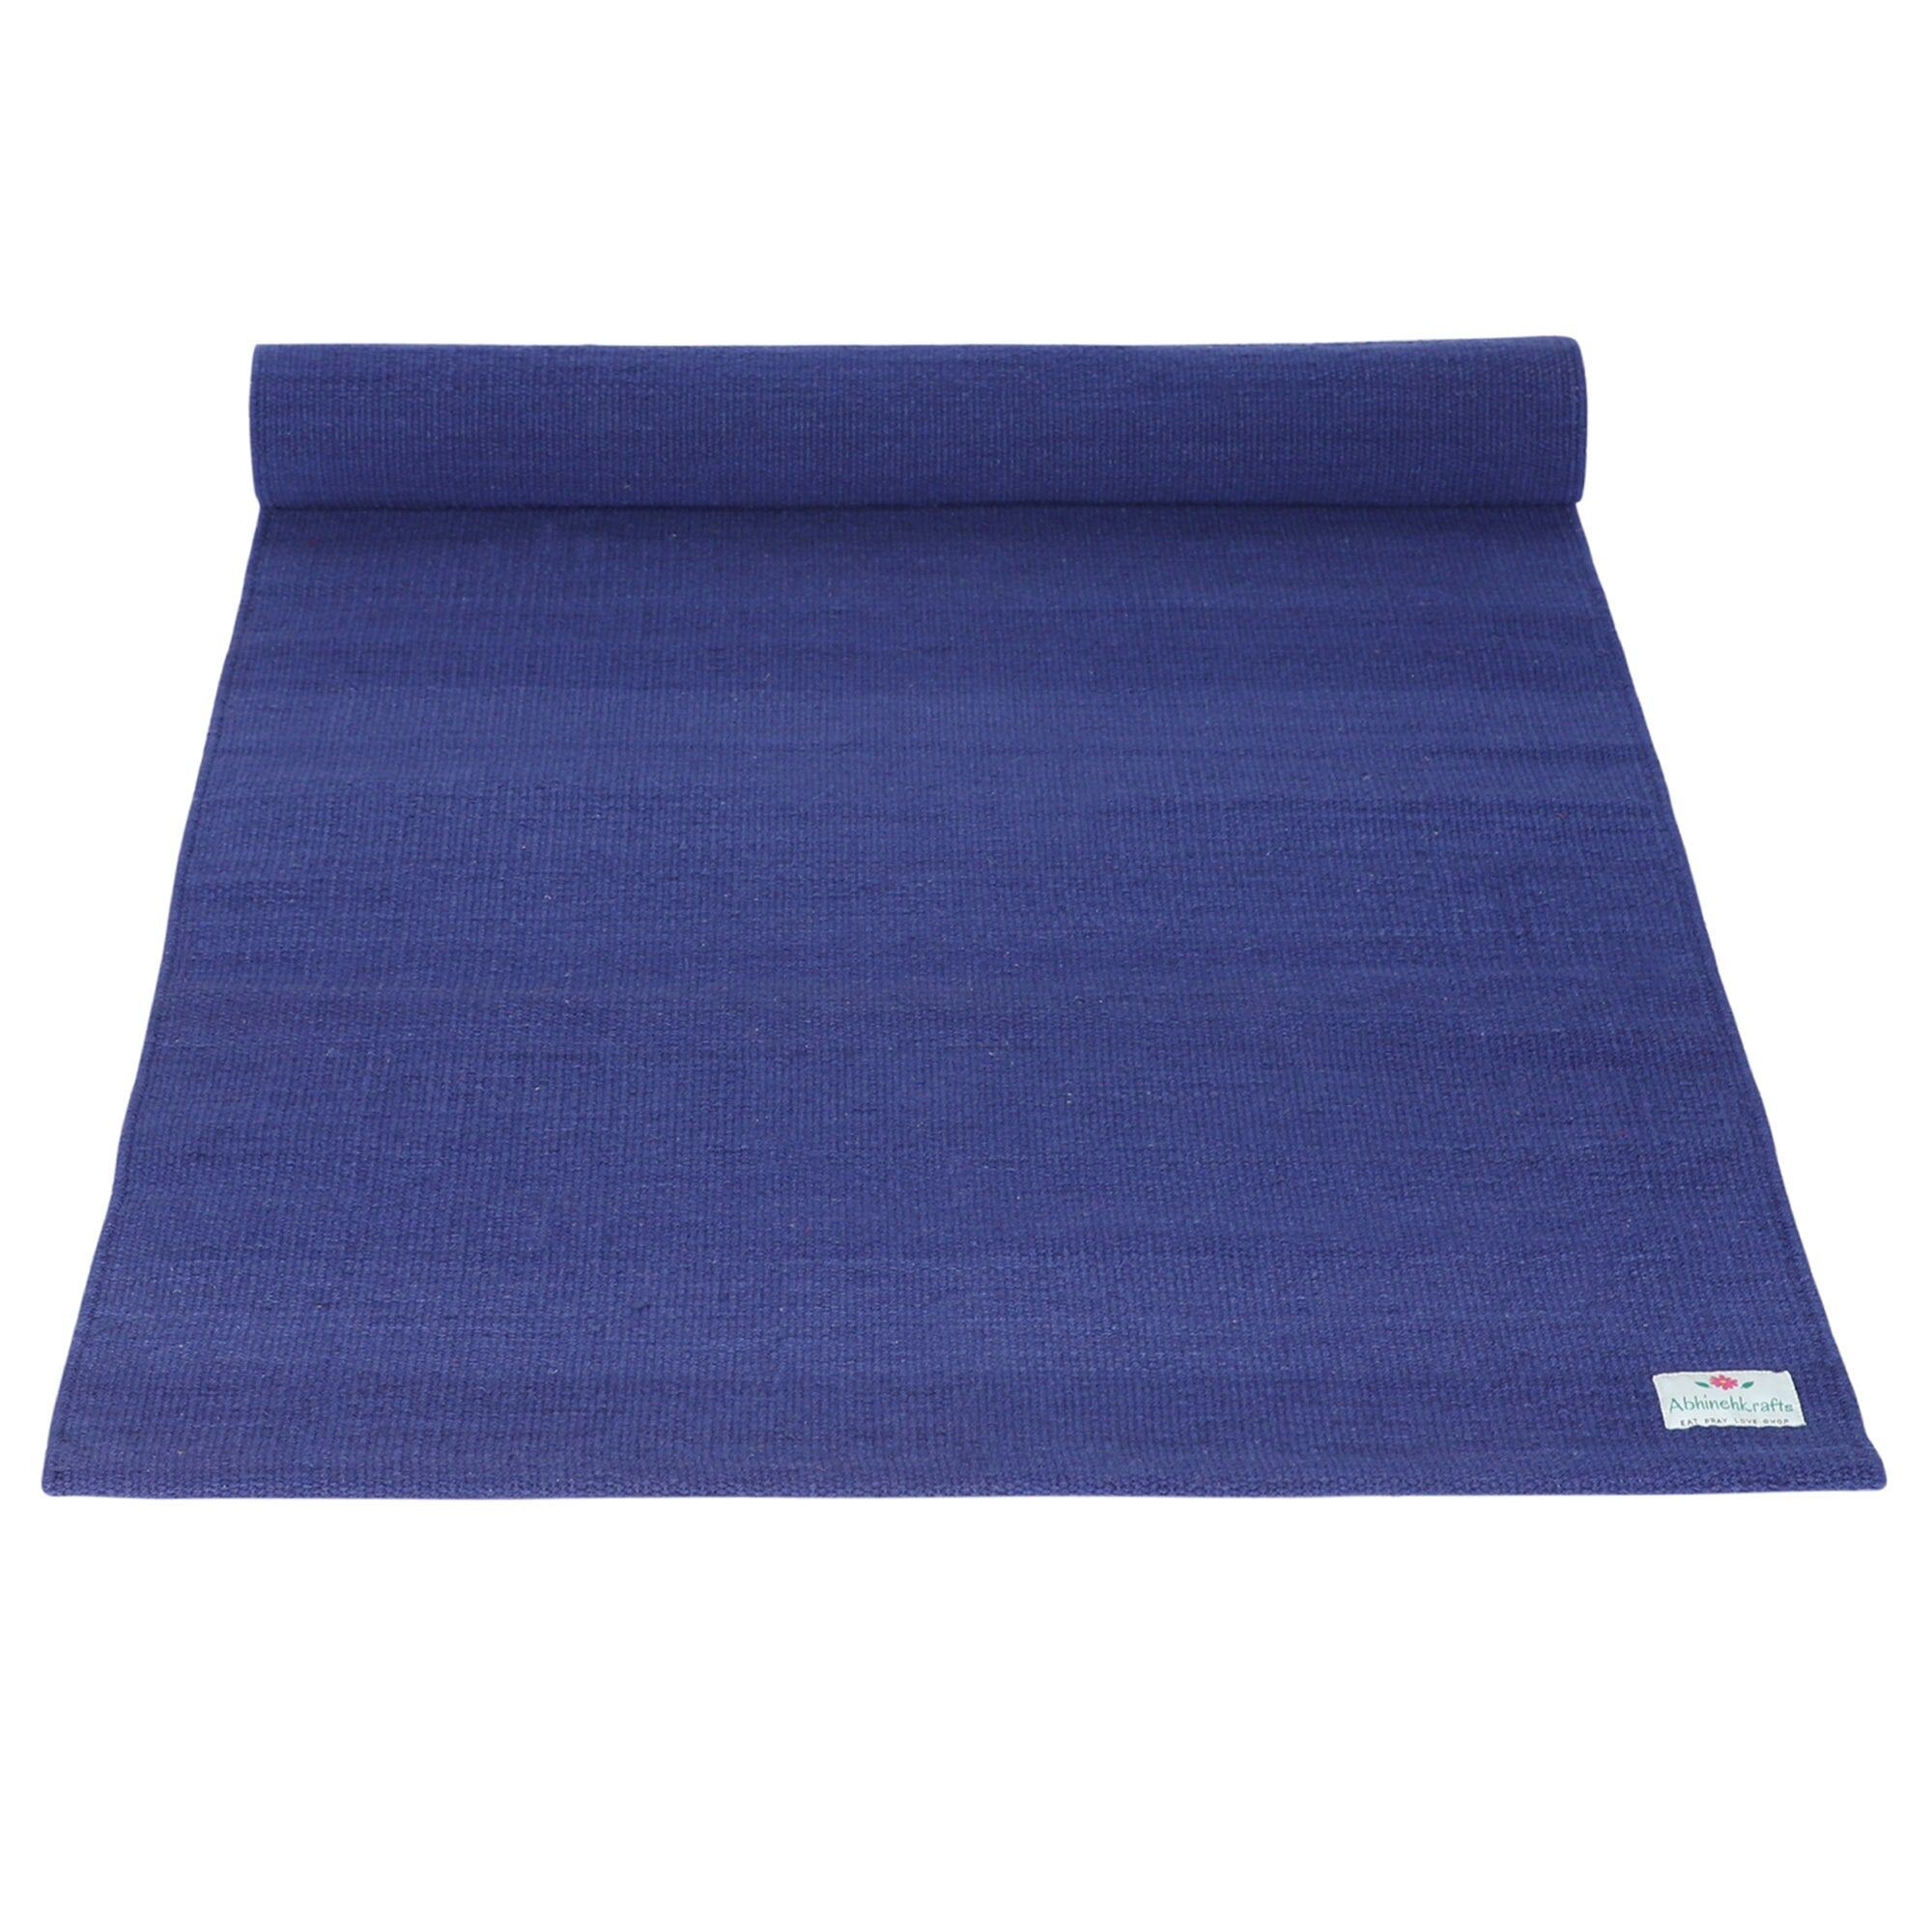 Saral Home Unicorn Soft Microfiber Antiskid Yoga/Excercise Mat (Blue